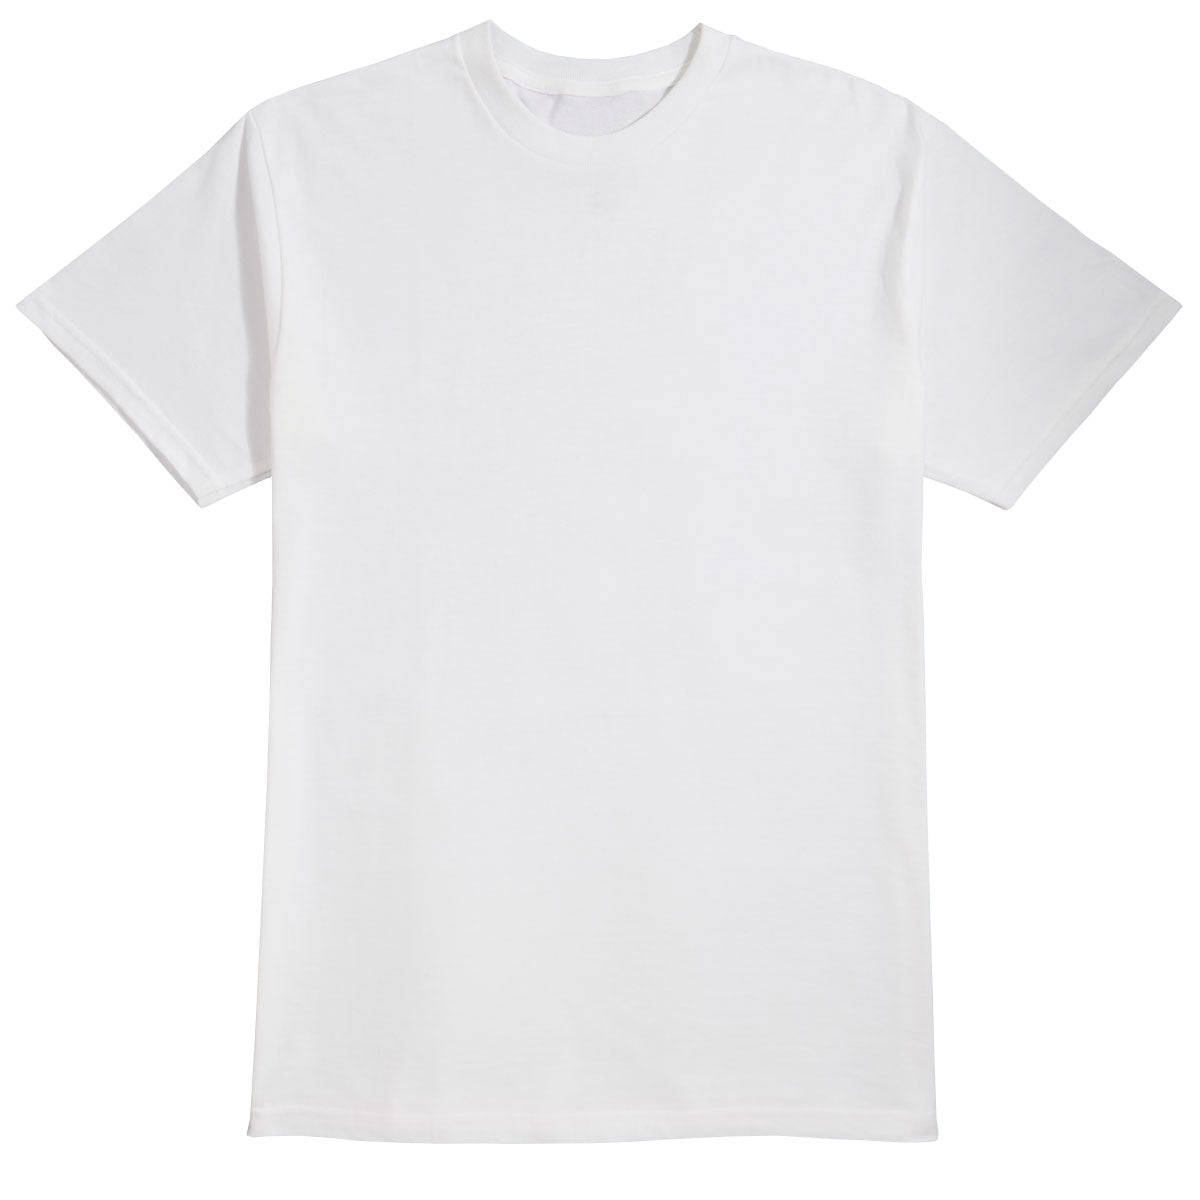 Yusuke Hanai Flash Sheet Customs X T-Shirt - White - MD image 1